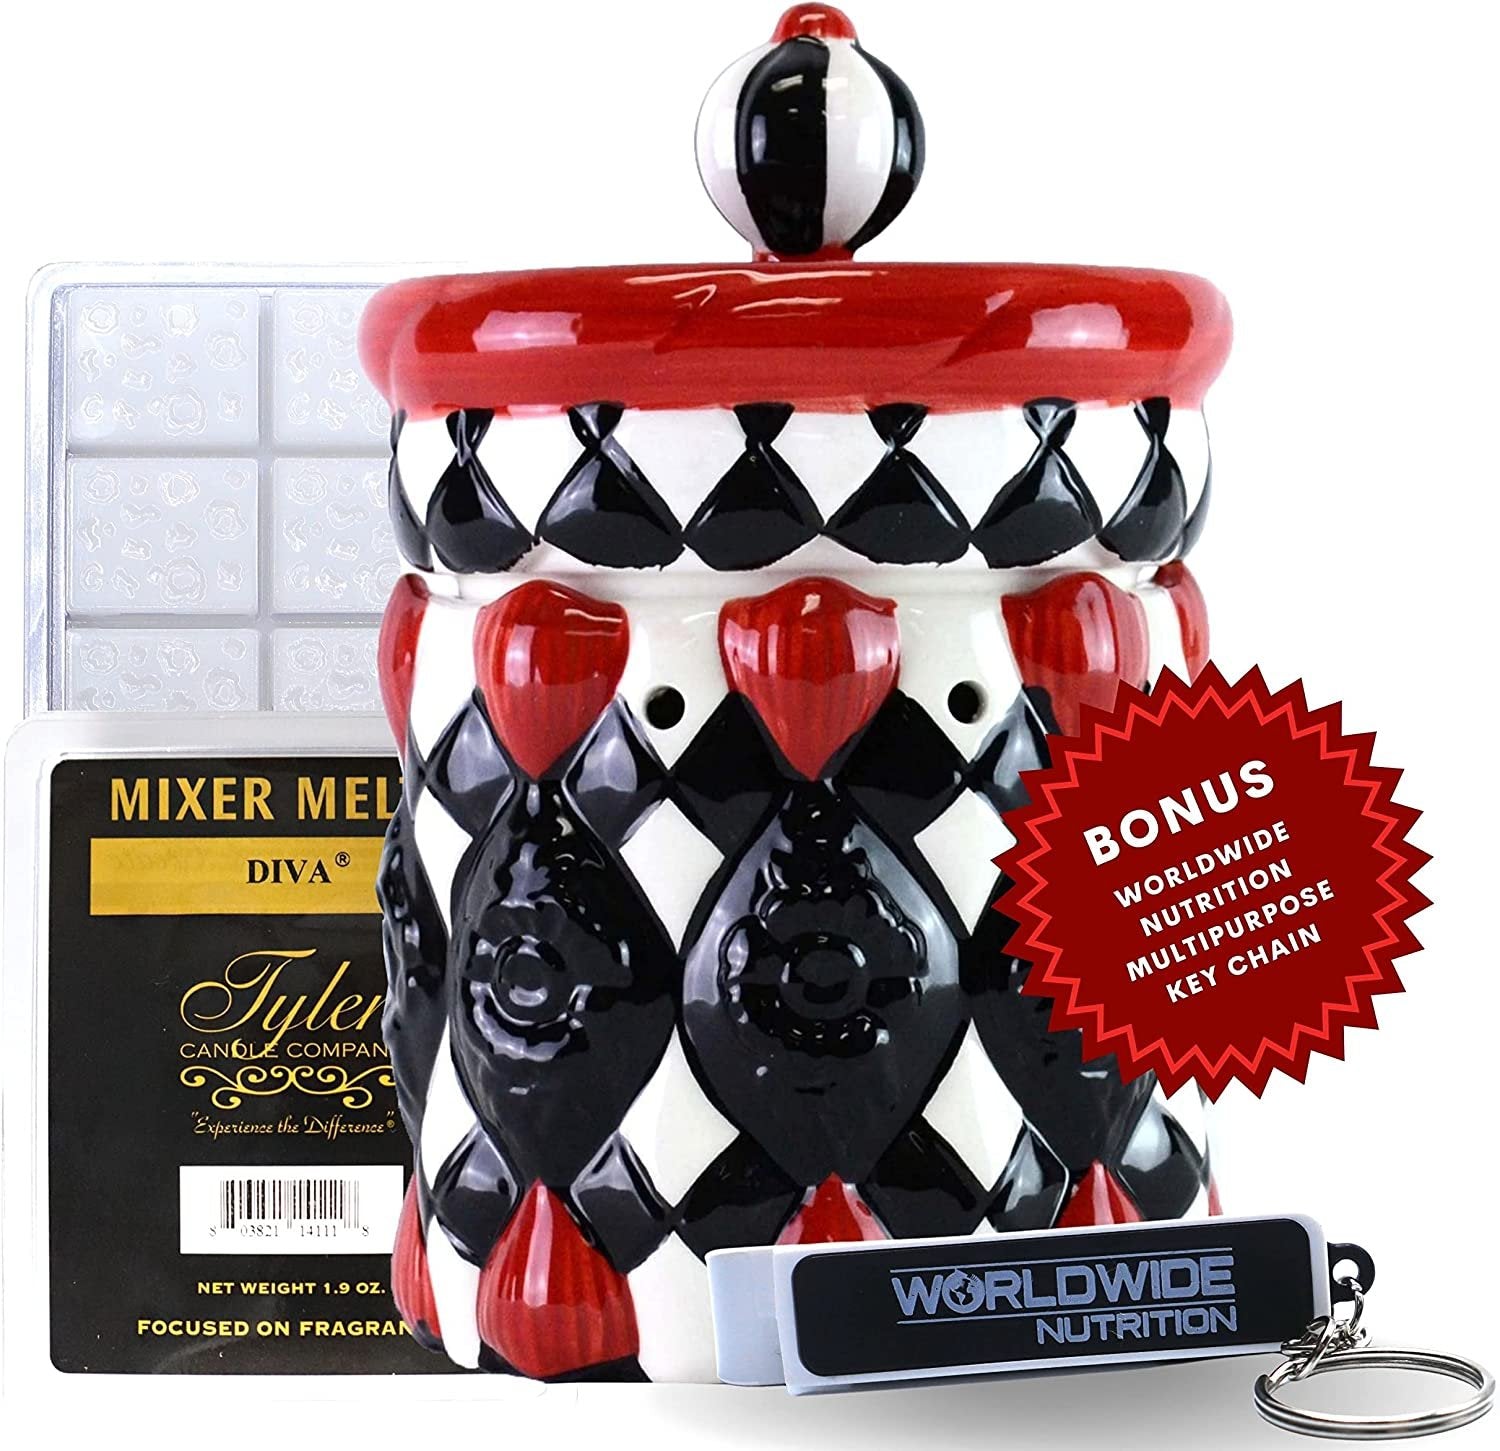 Tyler Candle Company Fanimal Tiger Fragrance Wax Warmer - Candle Wax M